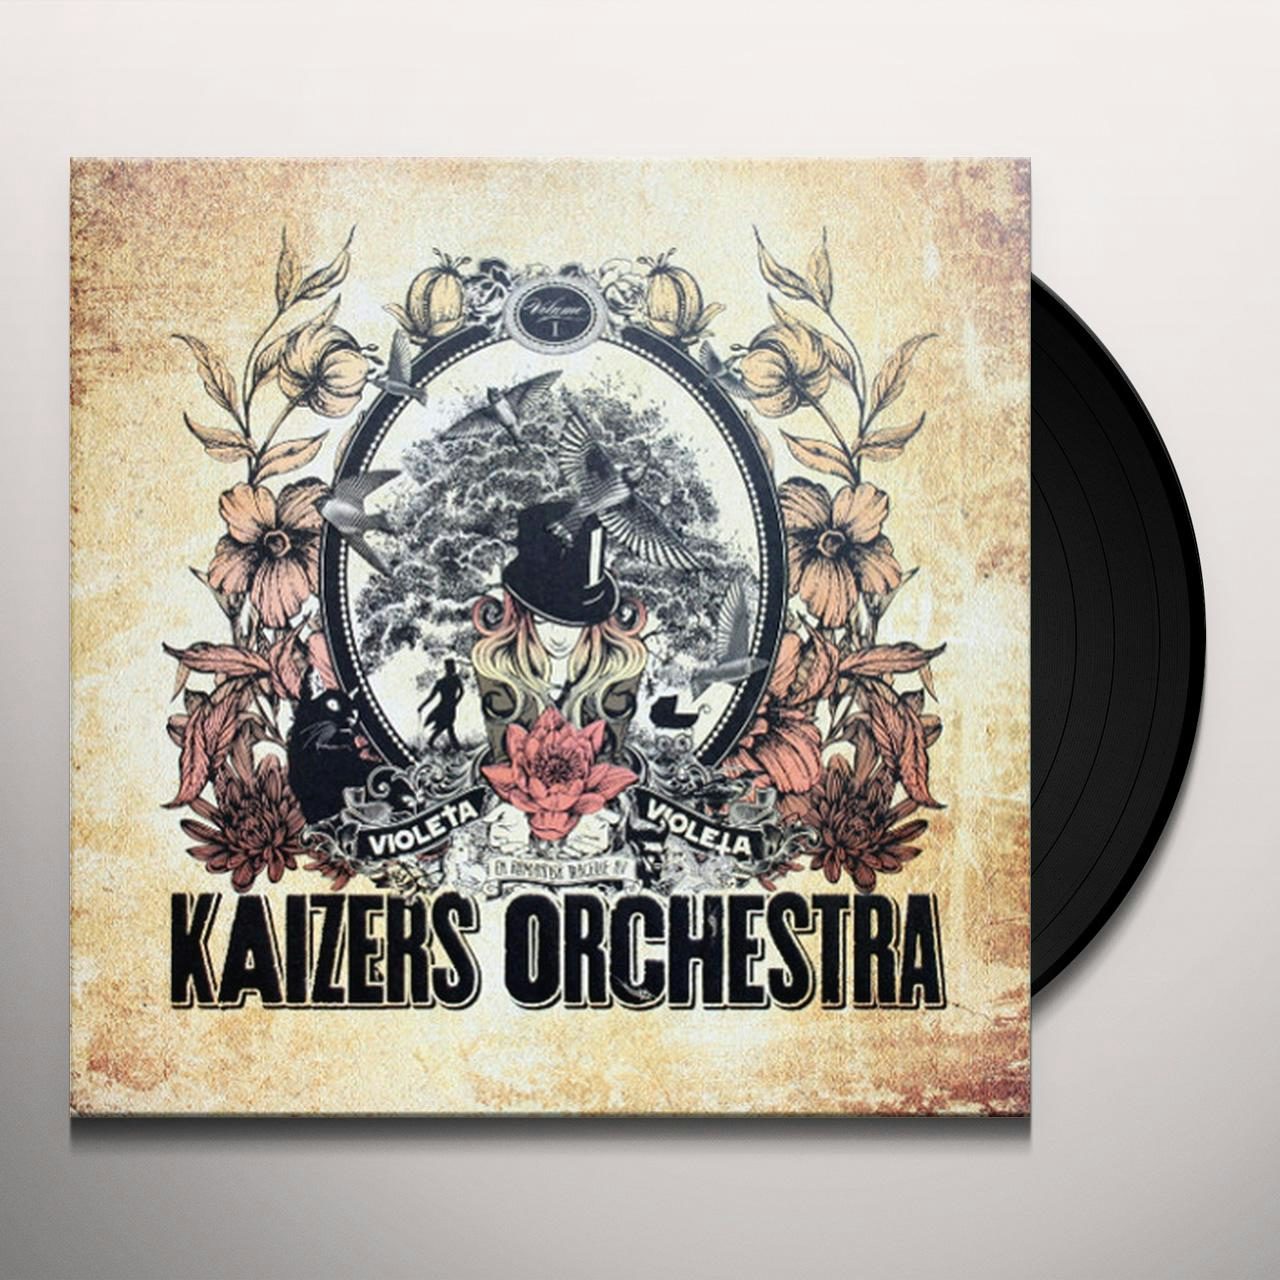 kaizers orchestra violeta